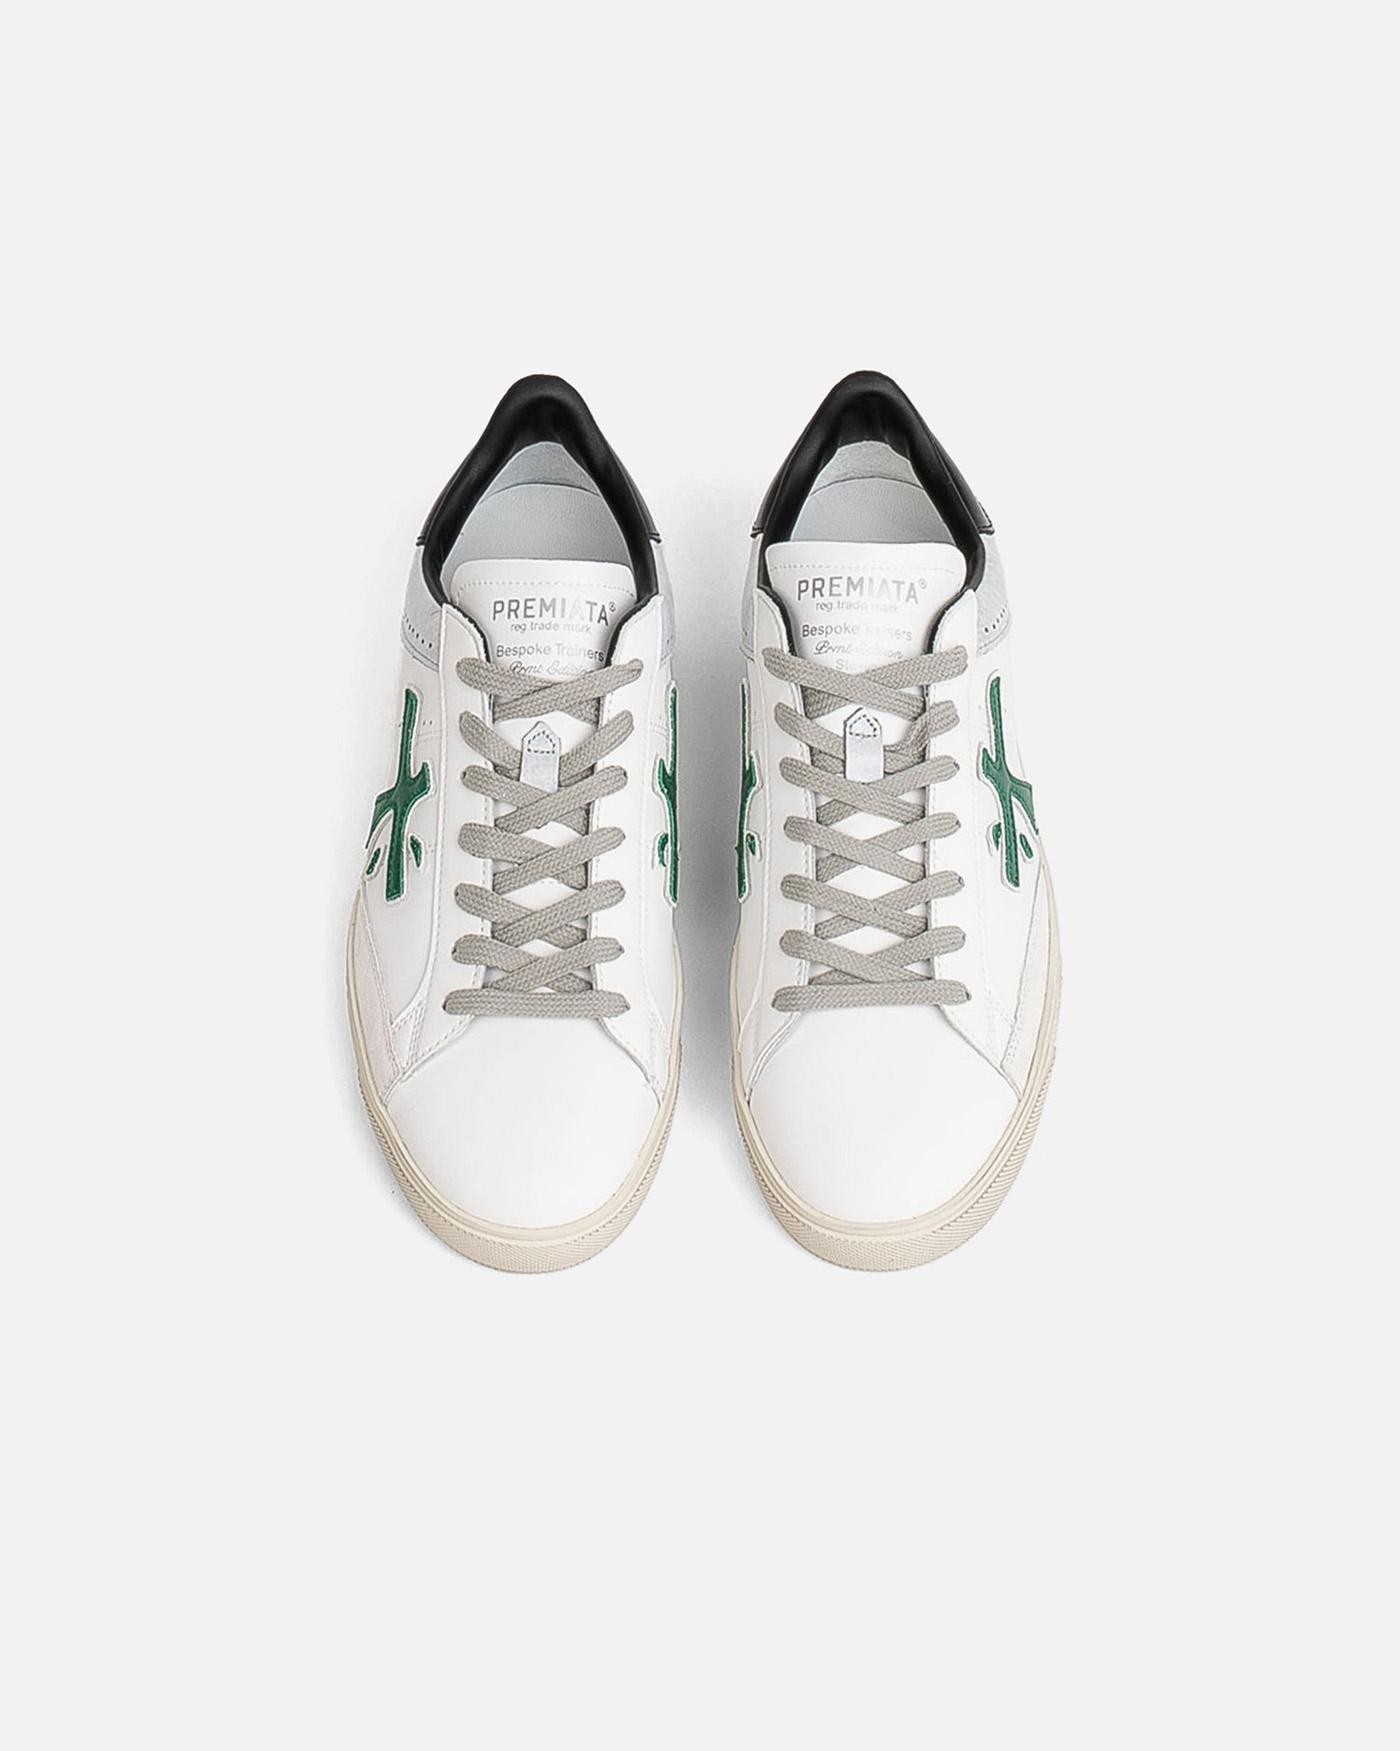 premiata-zapatillas-steven-6651-sneakers-white-blancas-6